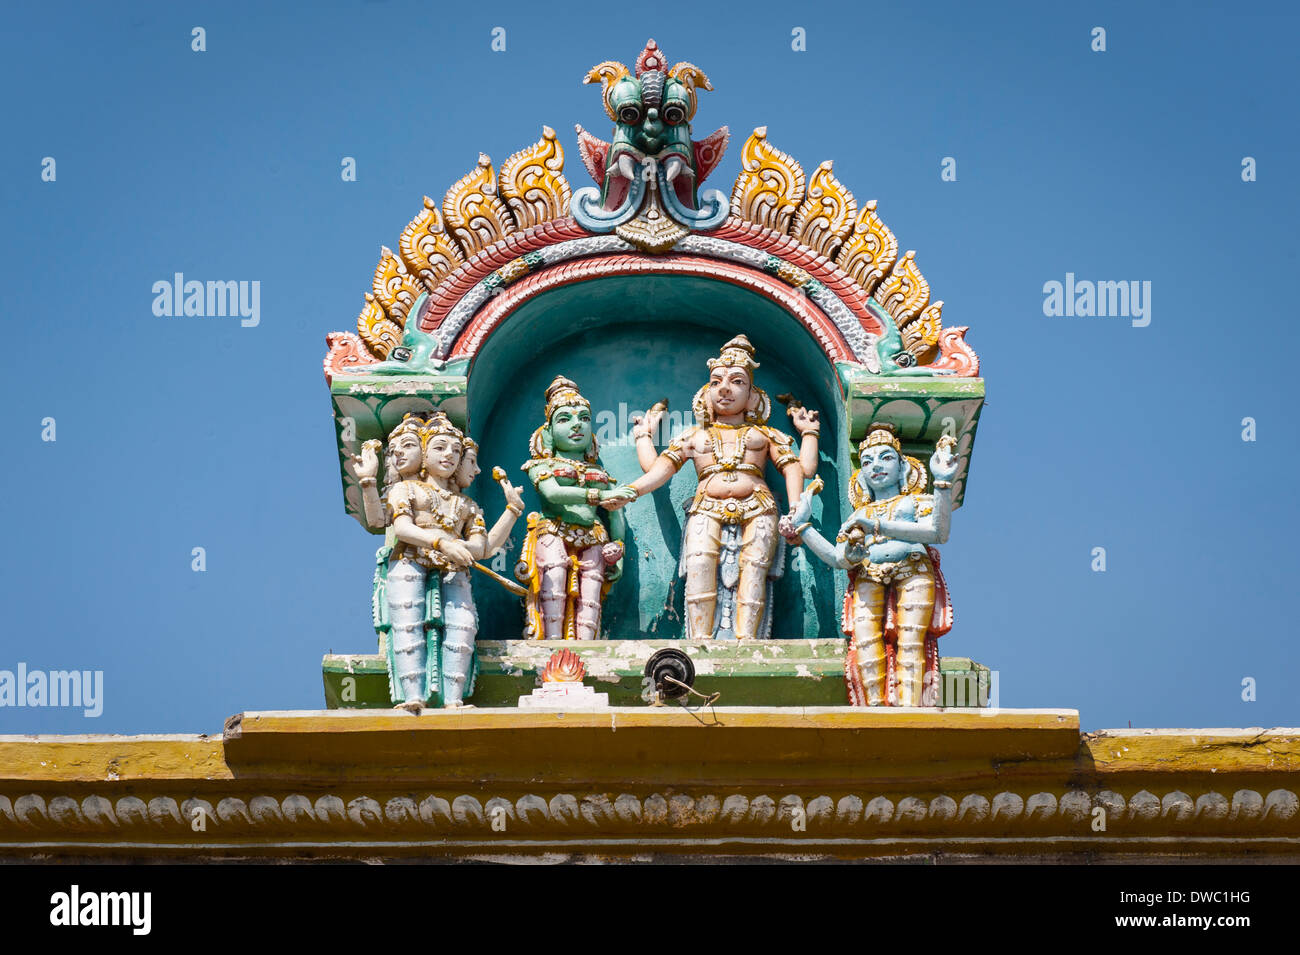 Indien Tamil Nadu Kanchipuram 6. Jahrhundert Sri Ekambareswarar Hindu Shiva Tempel Dach detail Stuckfiguren Statuen Skulpturen bunte Bunte Stockfoto